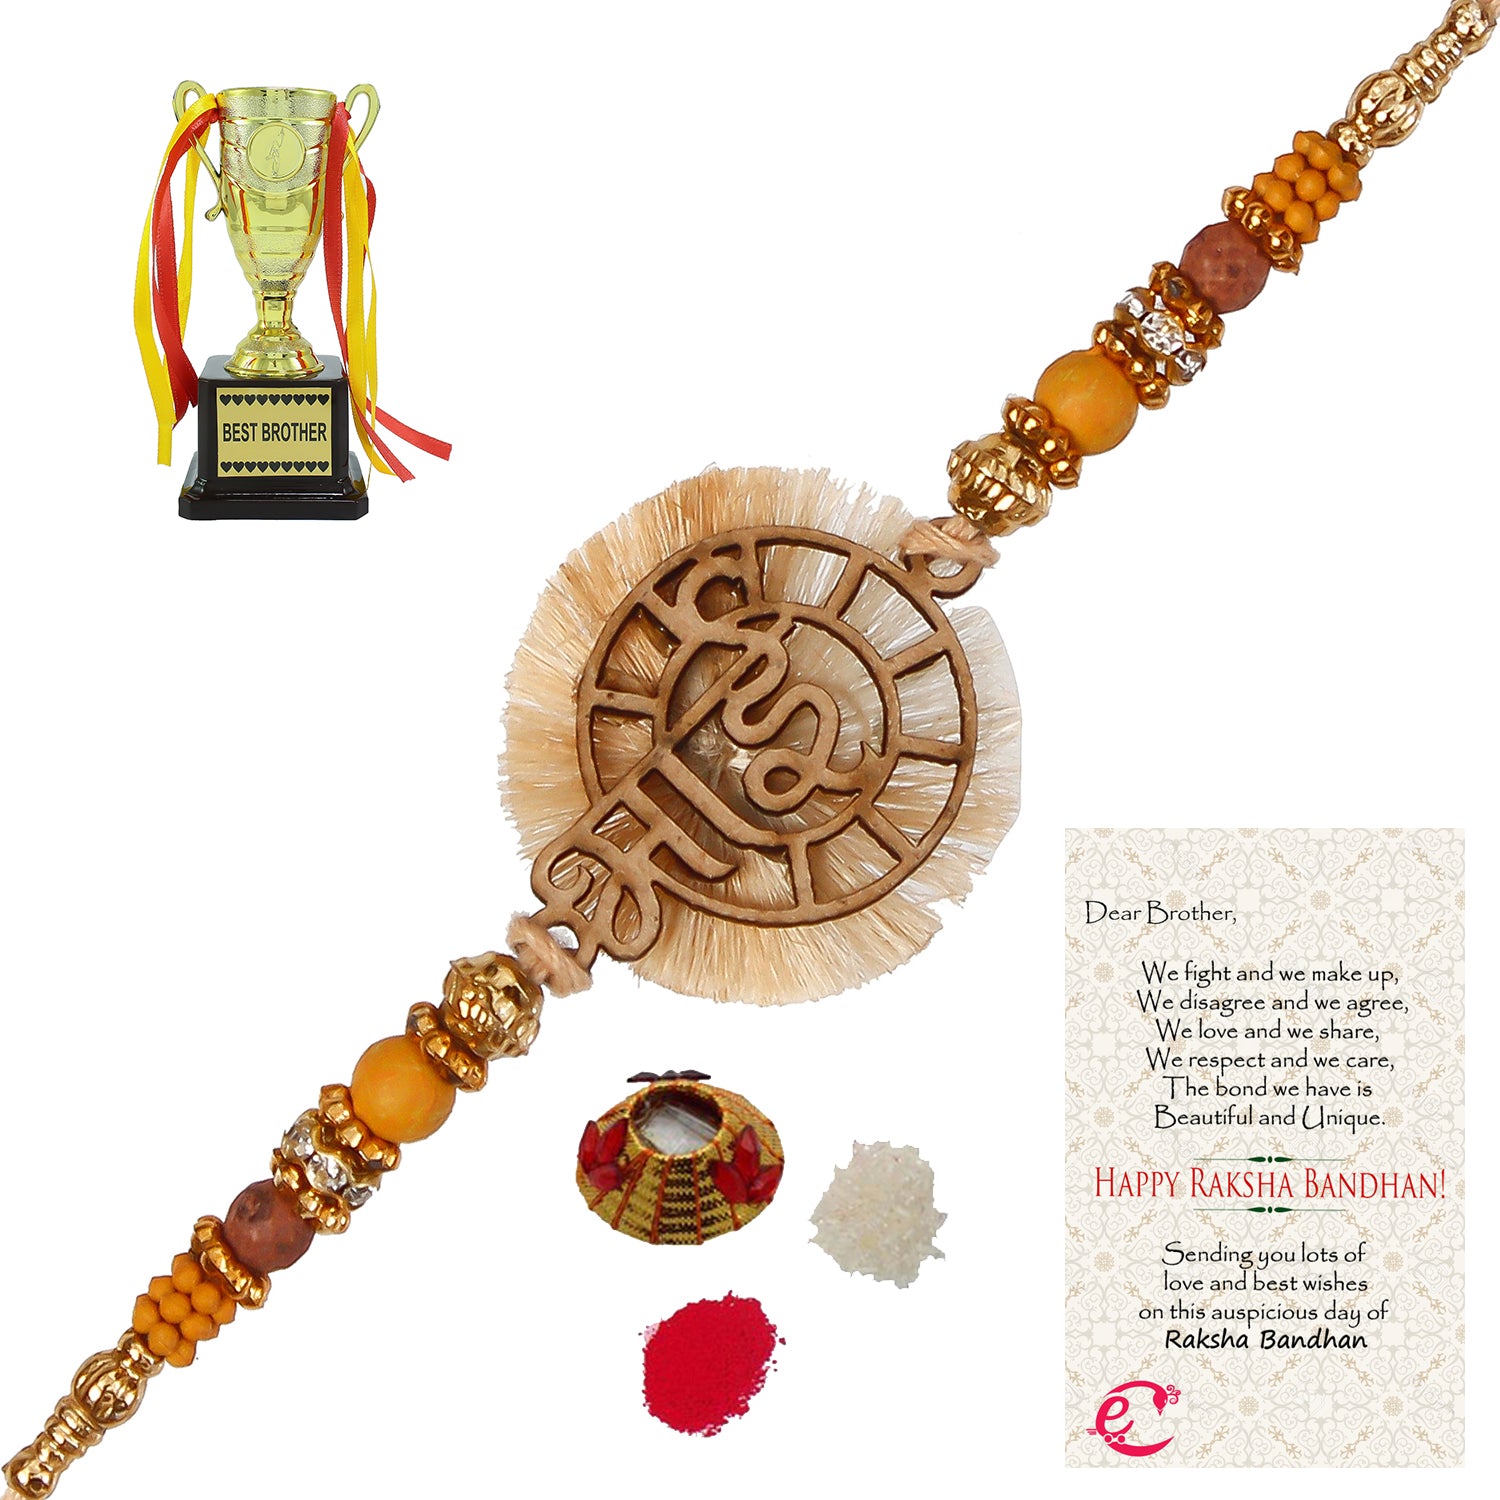 Designer Wooden Bhai Rakhi with Best Brother Trophy and Roli Tikka Matki, Best Wishes Greeting Card